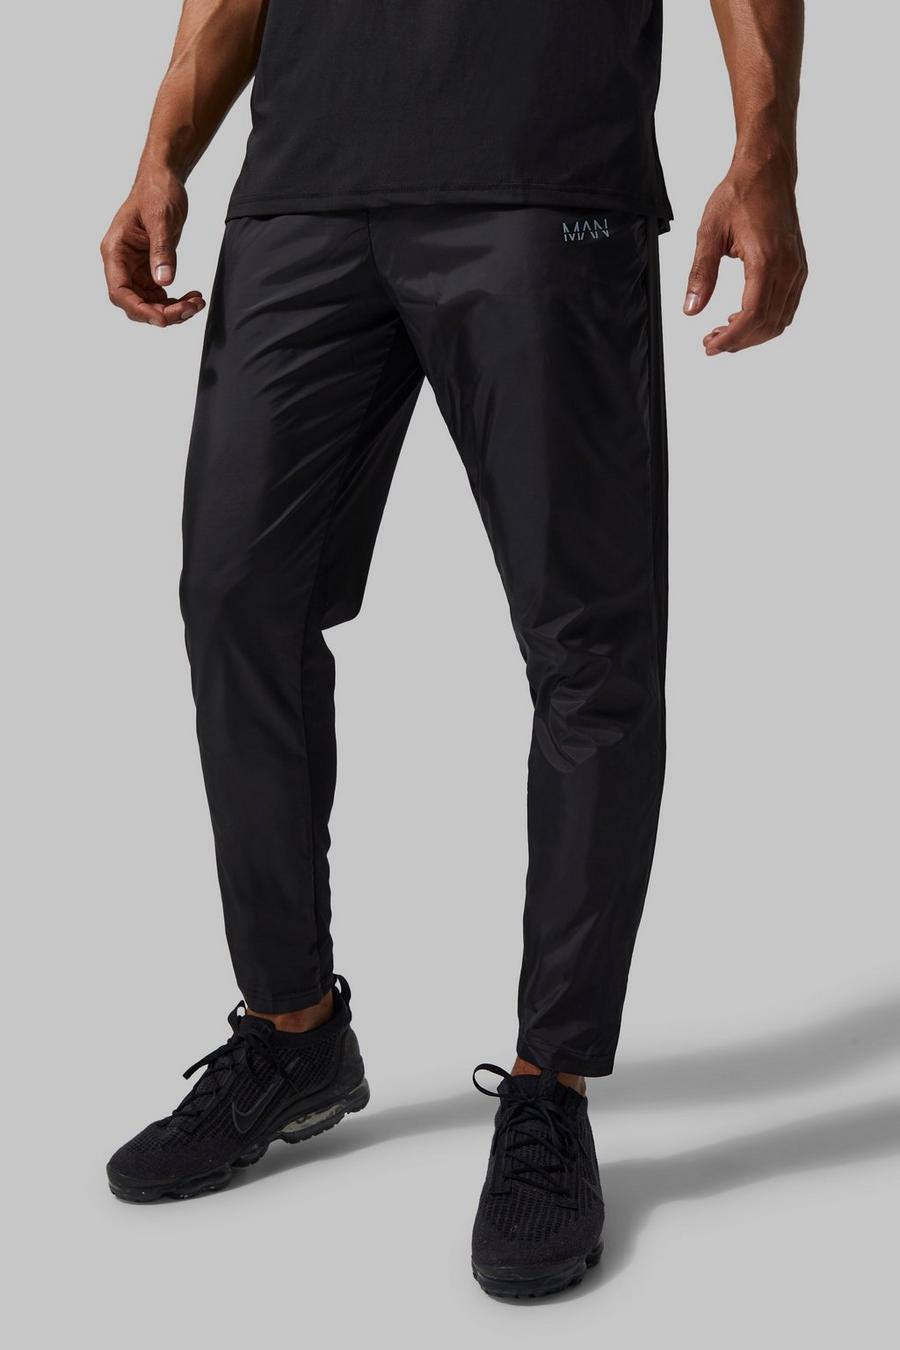 Pantalón deportivo MAN Active ajustado con panel mate, Black negro